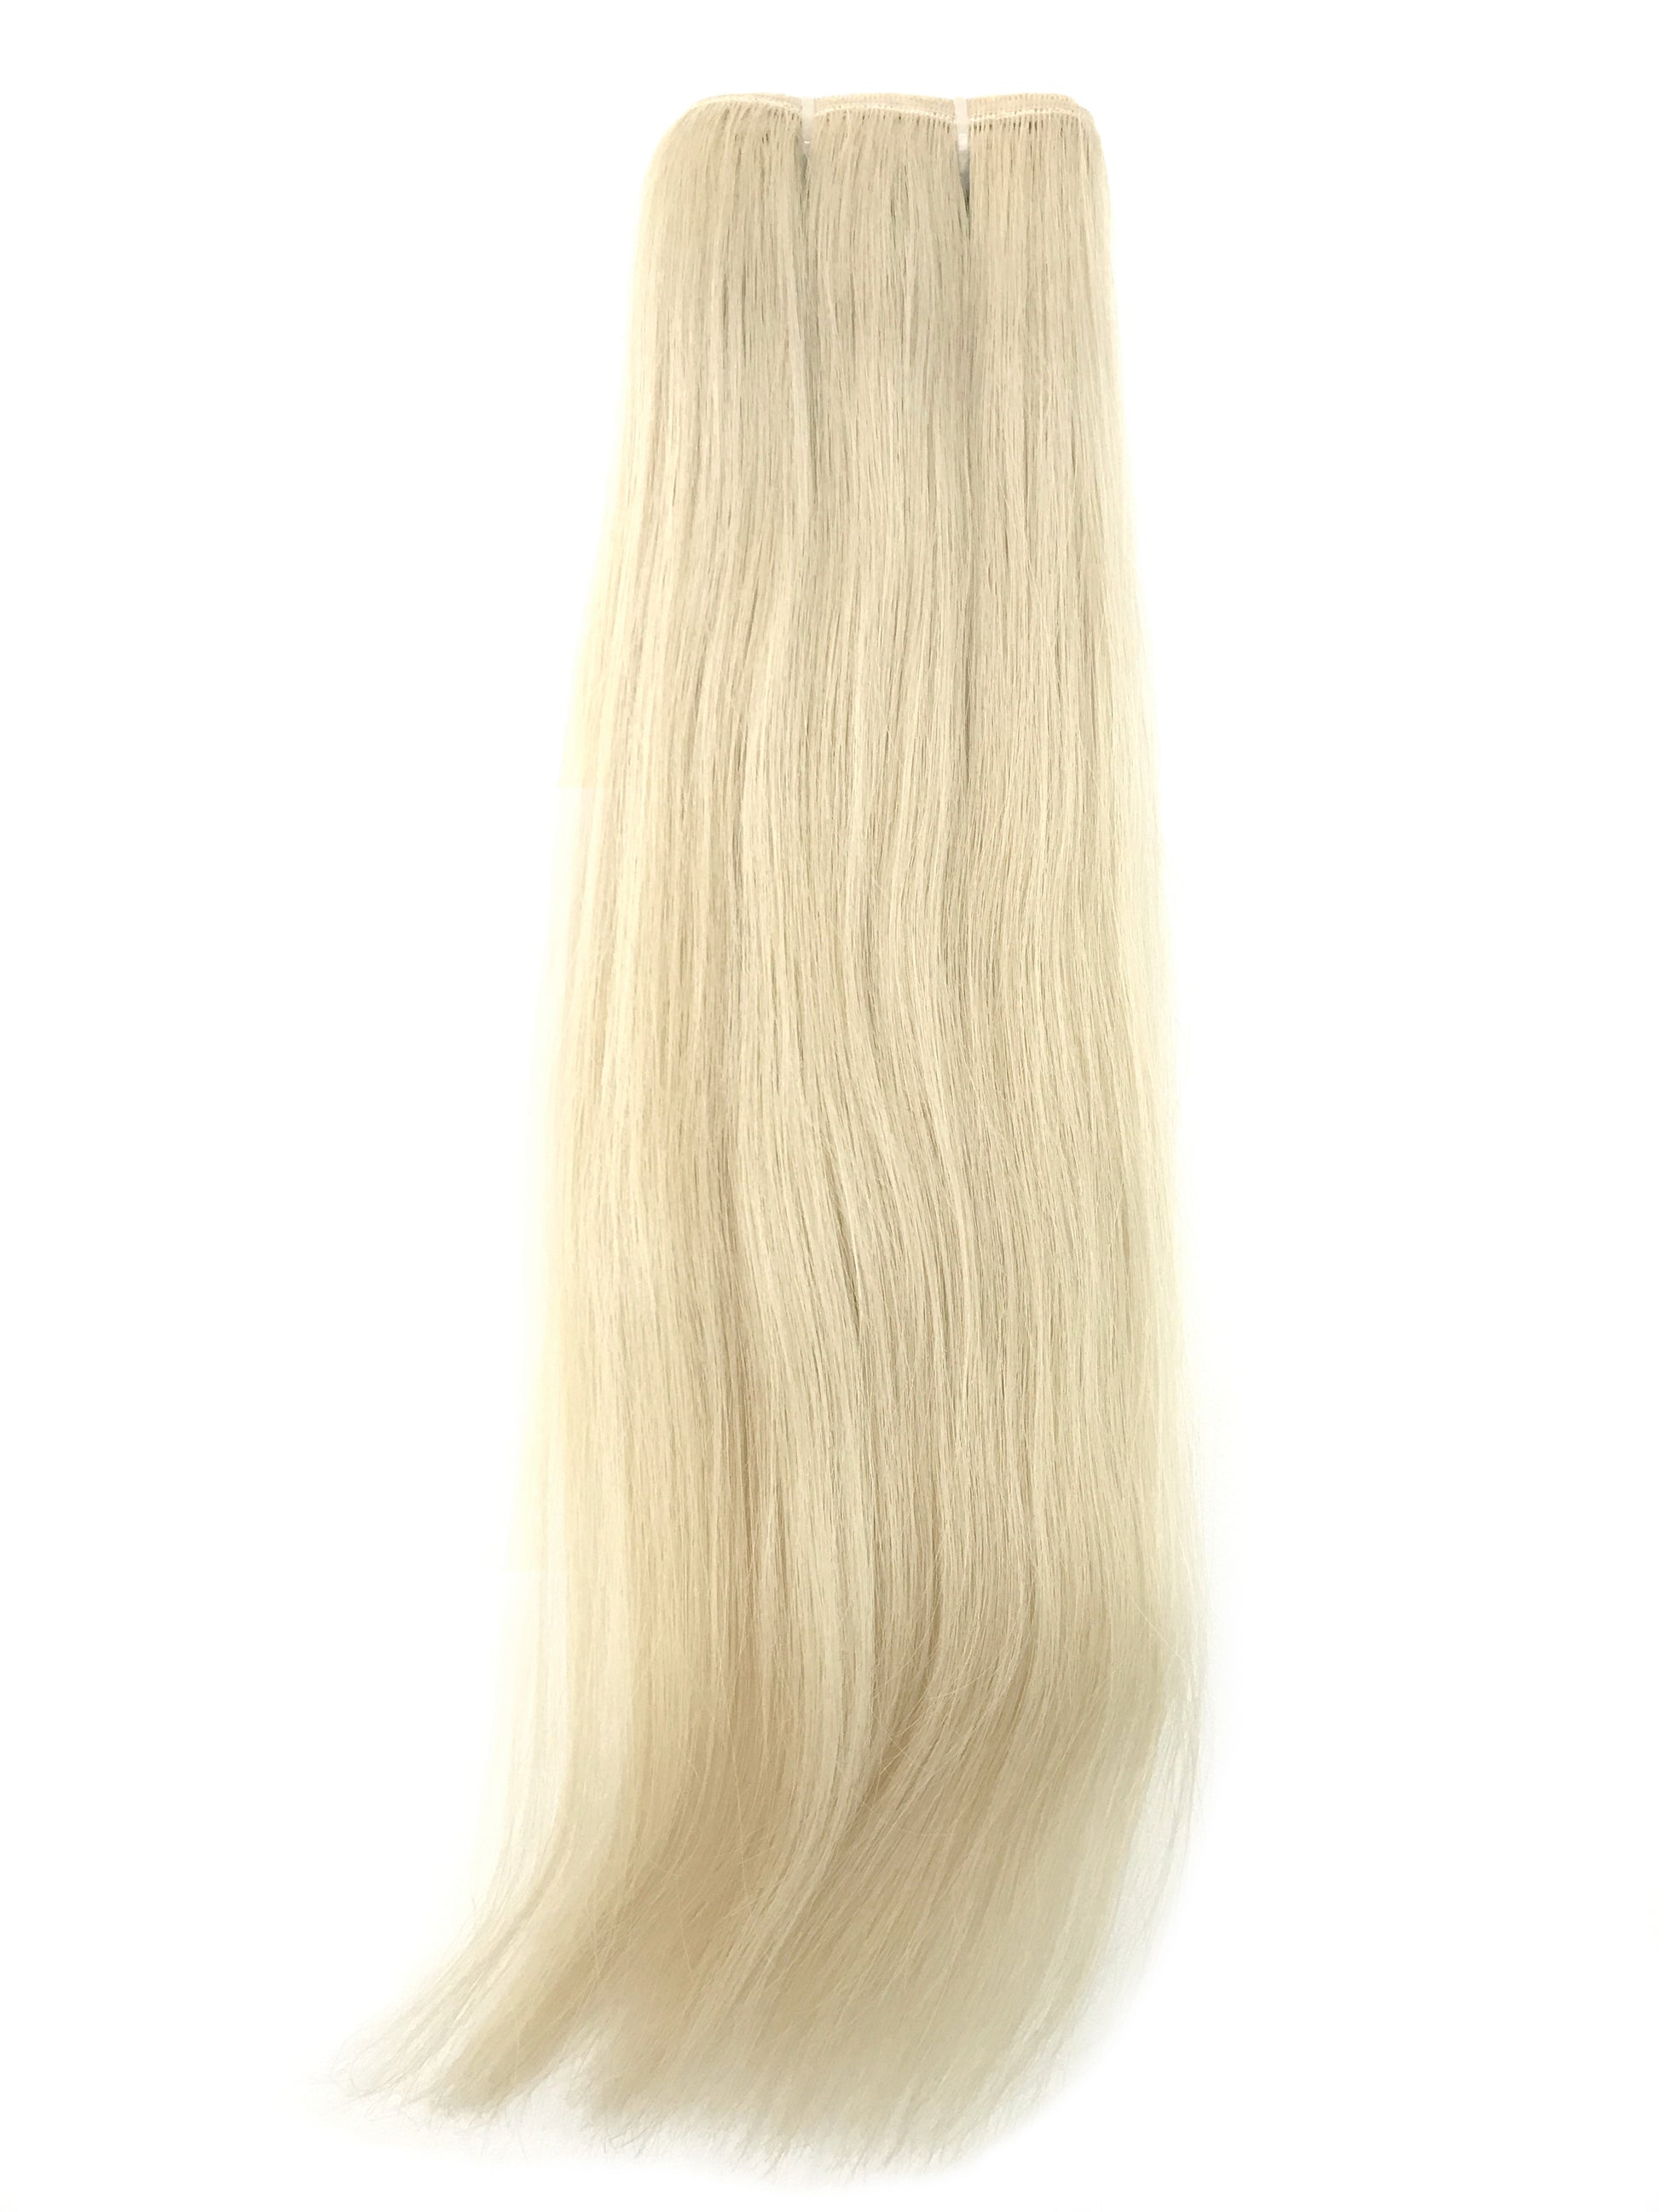 European Human Hair, Wefts, 18", Light Ash Blonde, 100g-Virgin Hair & Beauty, The Best Hair Extensions, Real Virgin Human Hair.